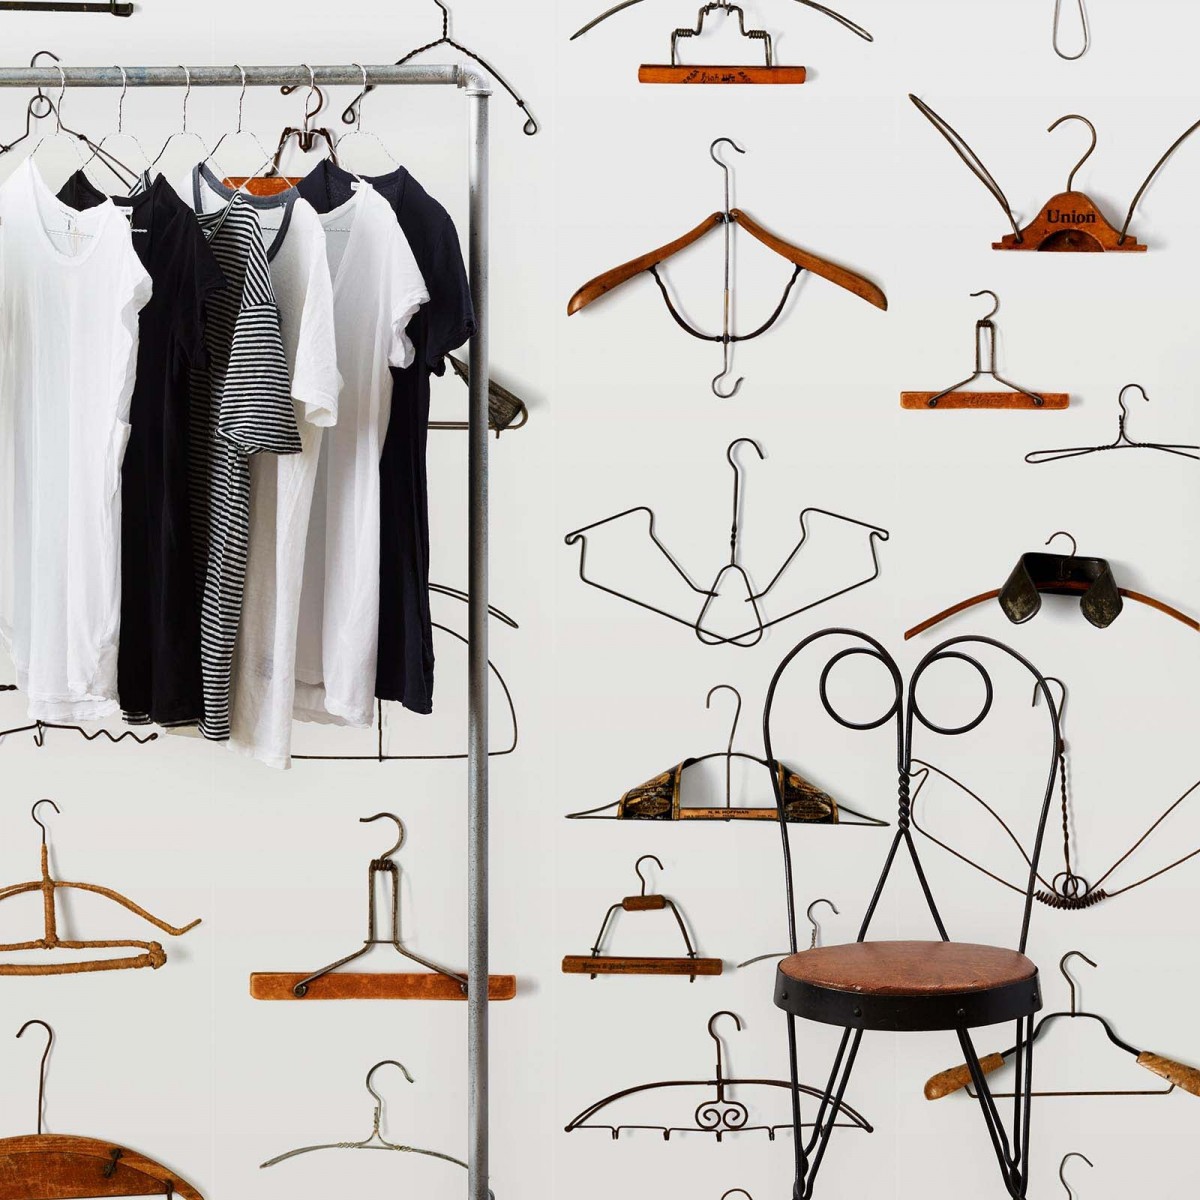 Tapet designer Obsession Hangers by Daniel Rozensztroch, NLXL, 4.9mp / rola, Tapet Exclusivist 